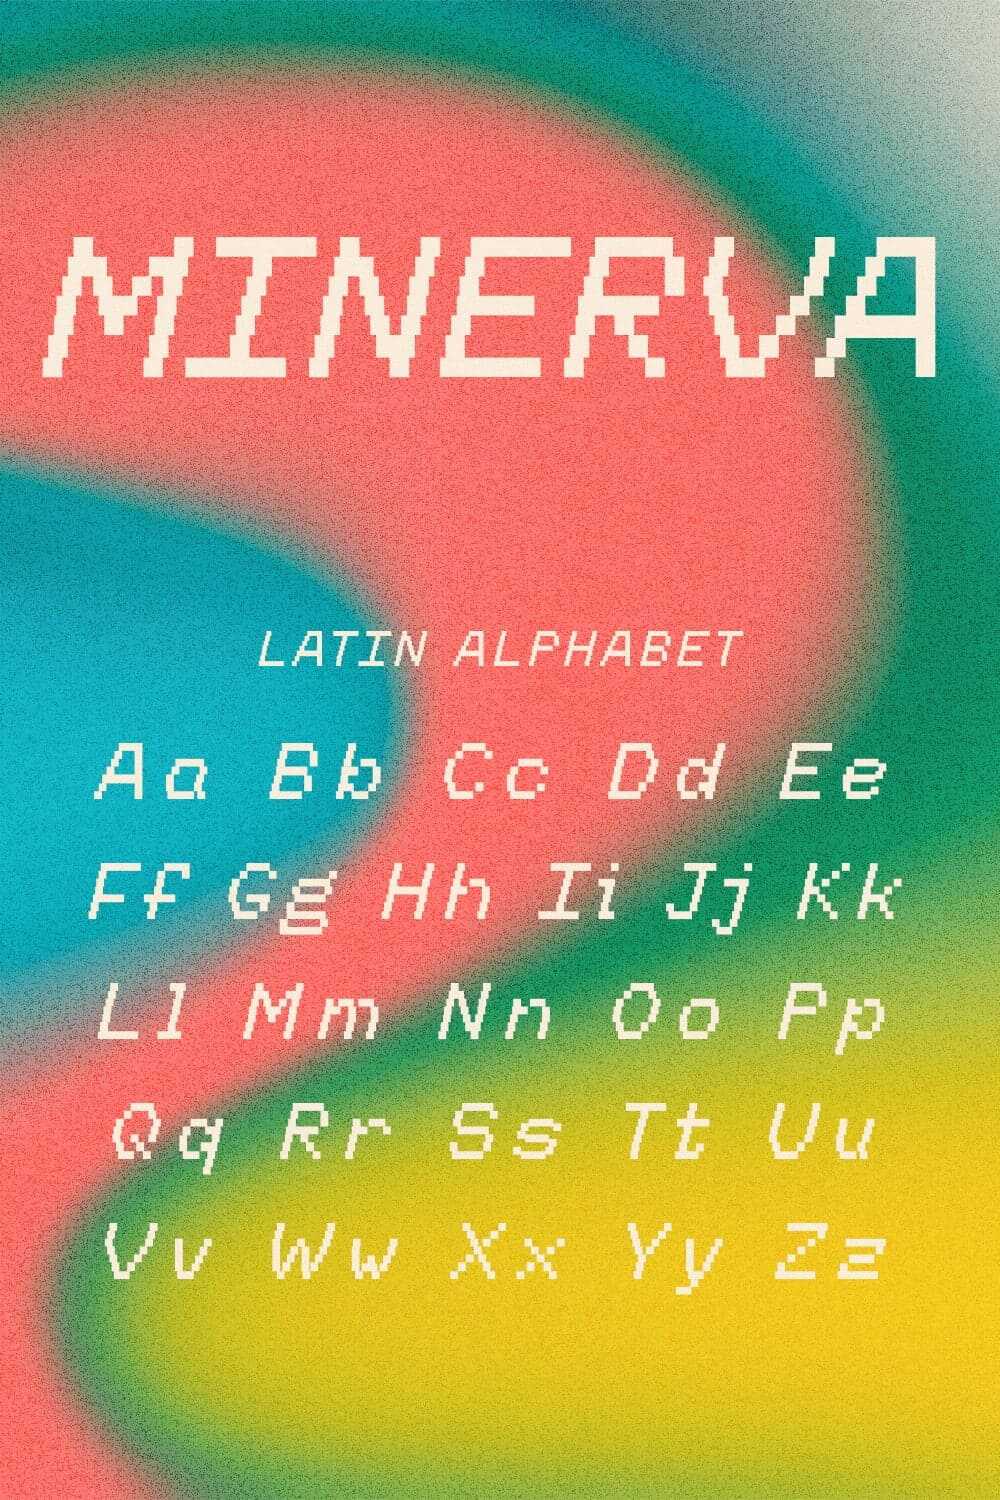 Minerva pixel font Pinterest MasterBundles preview with latin alphabet.